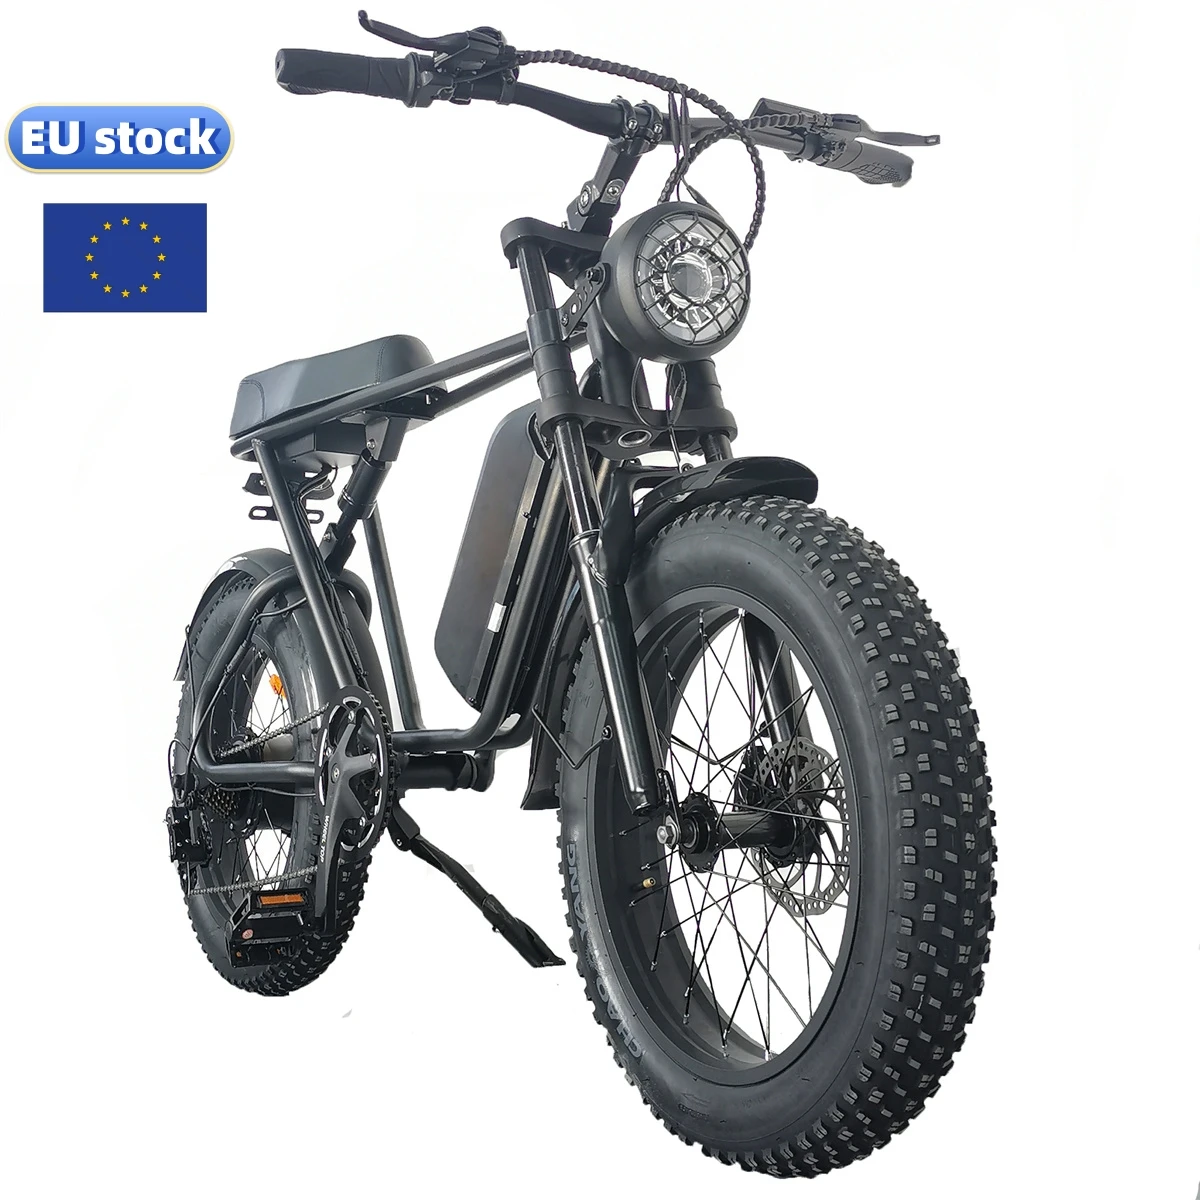 

Hot selling European warehouse 0 tax 48V 20inch fat tire e bike 1000w electric bicycle 70km lomh range ebike for adults